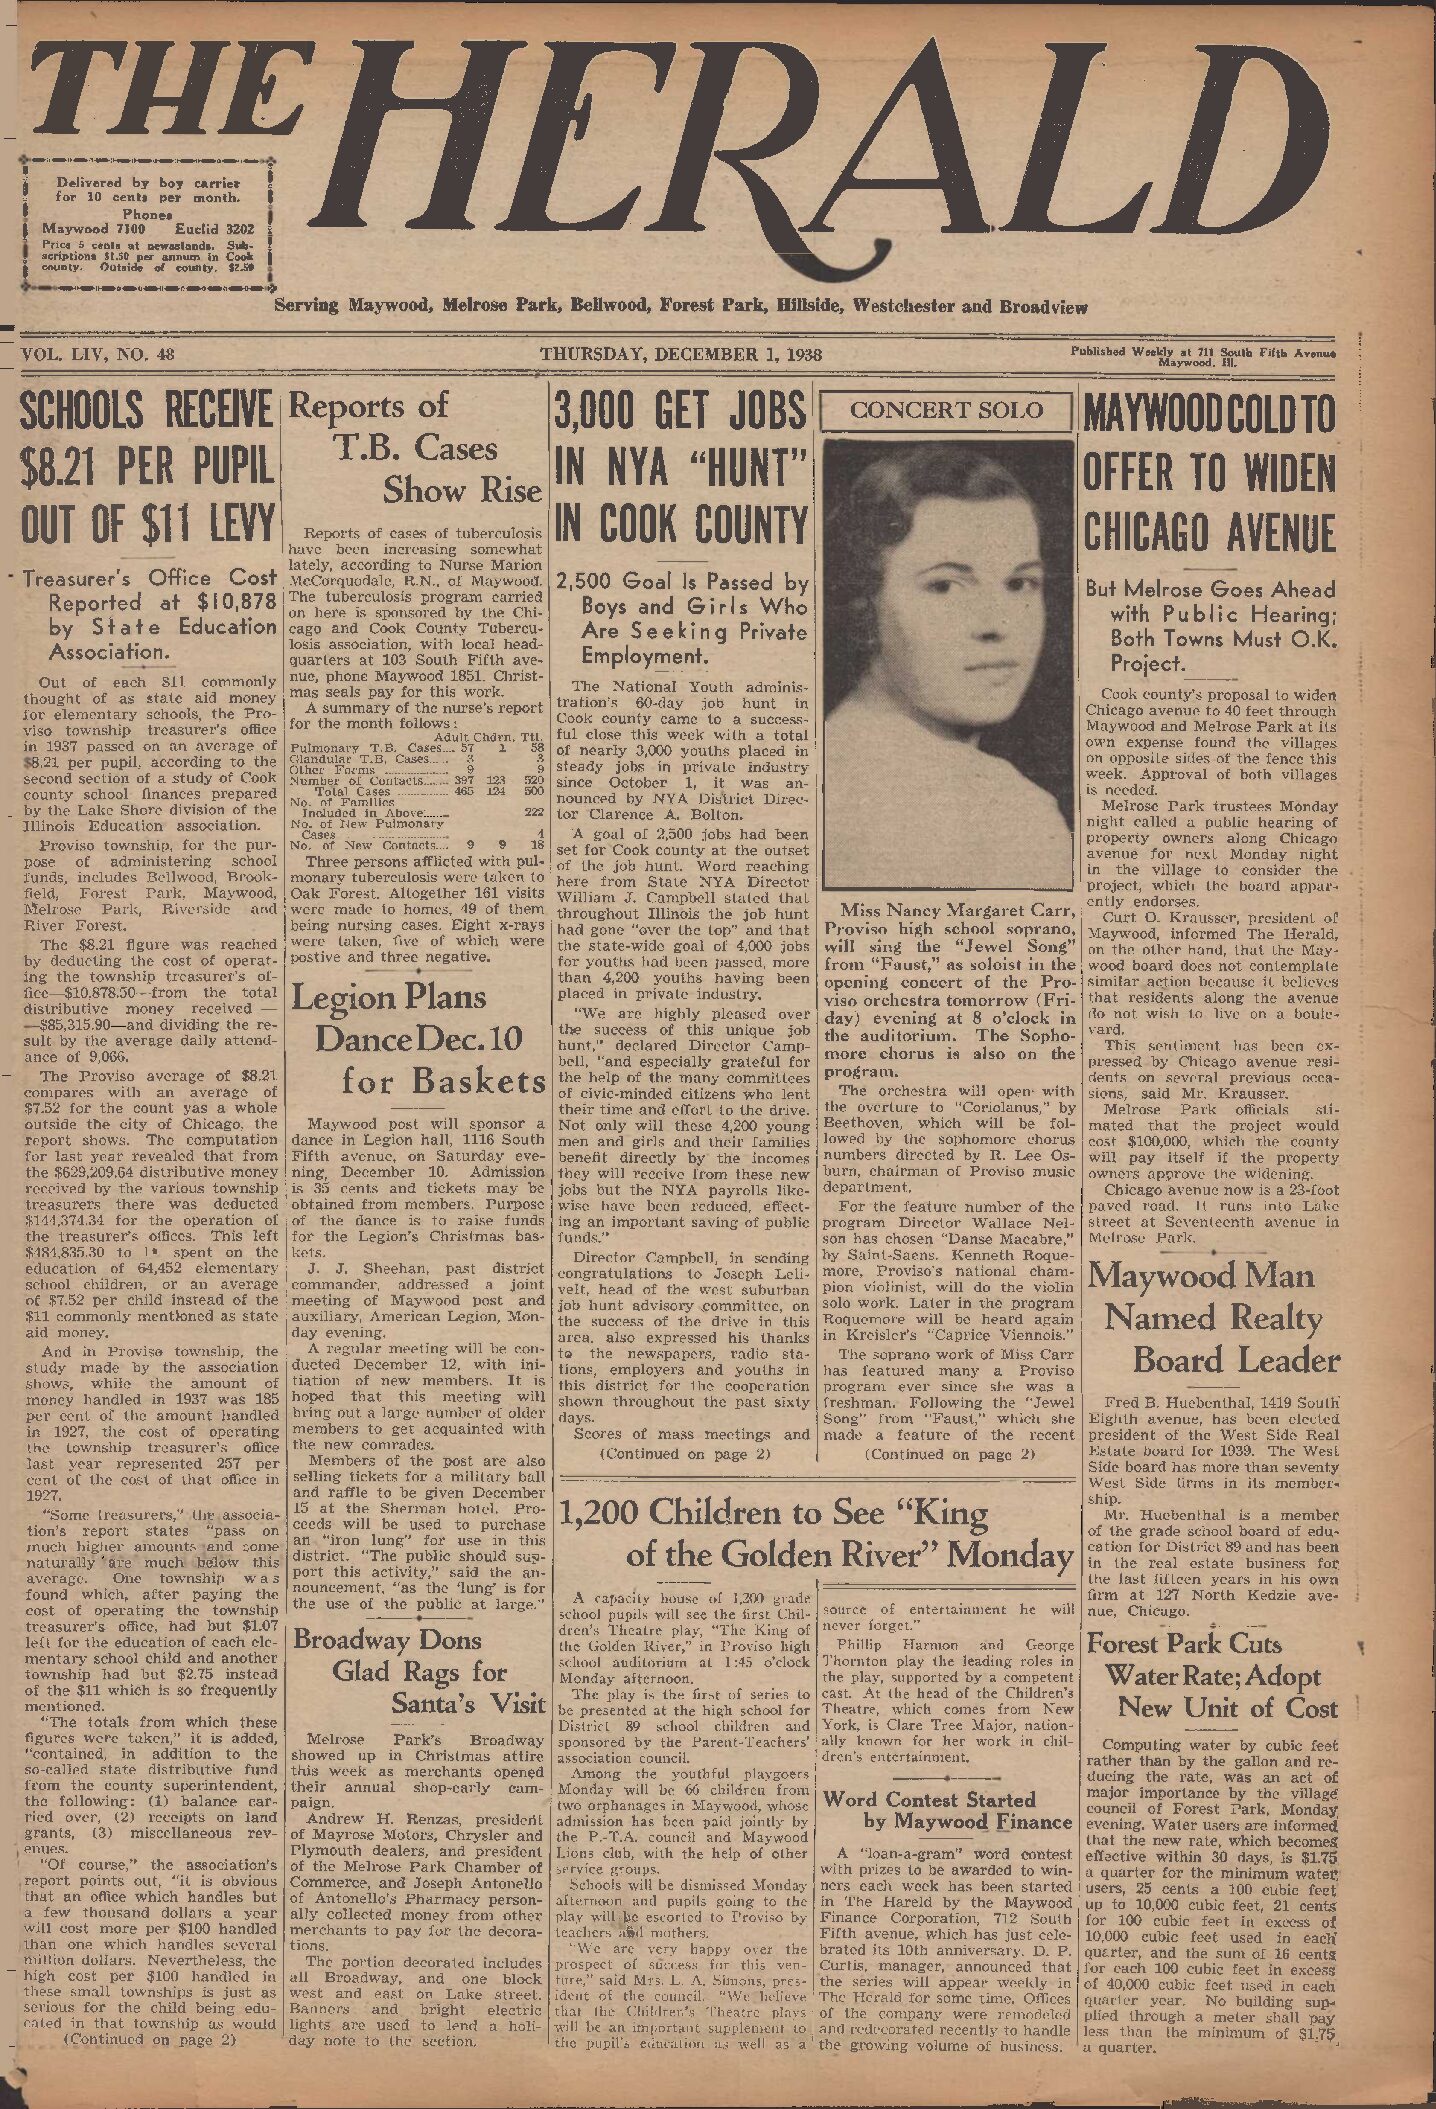 The Herald – 19381201